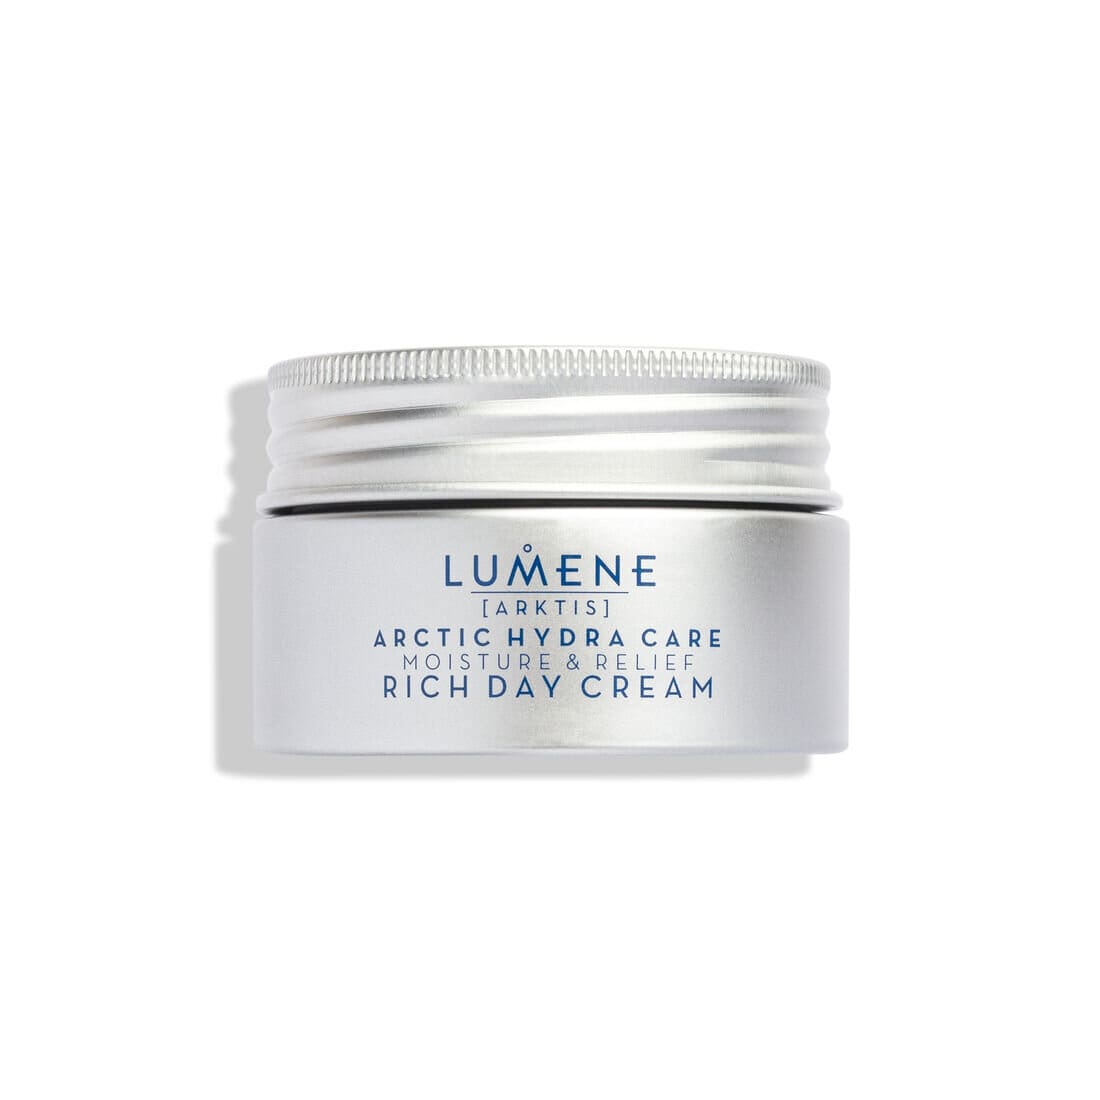 Picture of Lumene (Arktis) Arctic Hydra Care Moisture & Relief Rich Day Cream